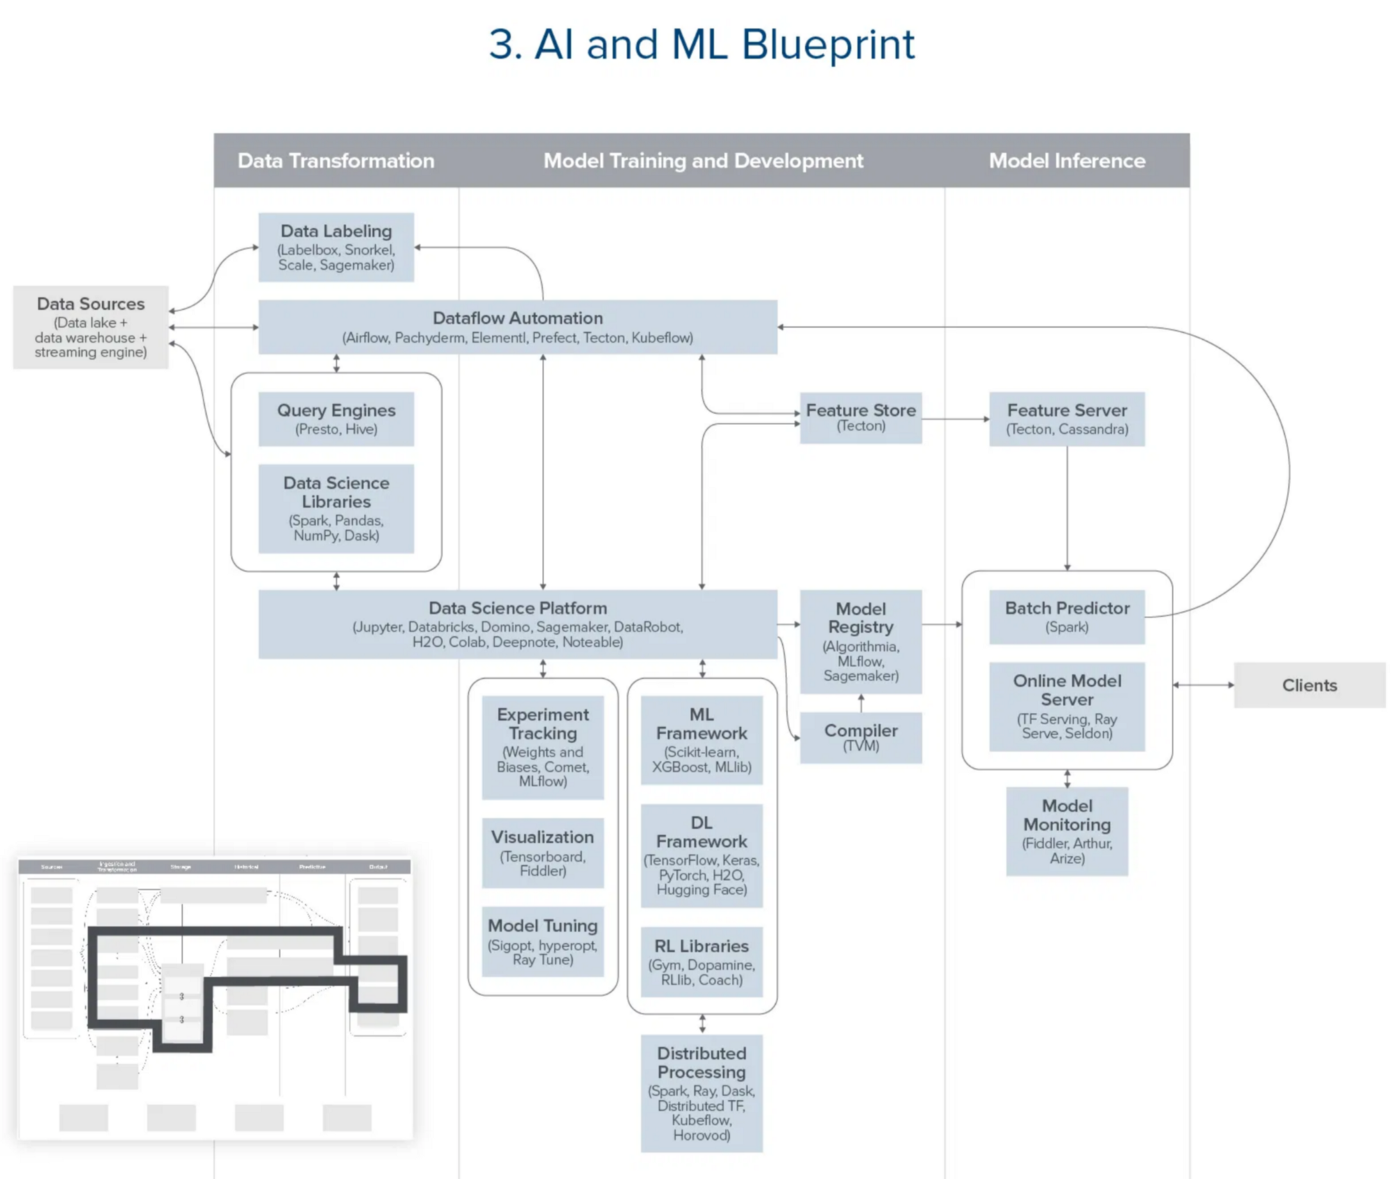 AI and ML Blueprint